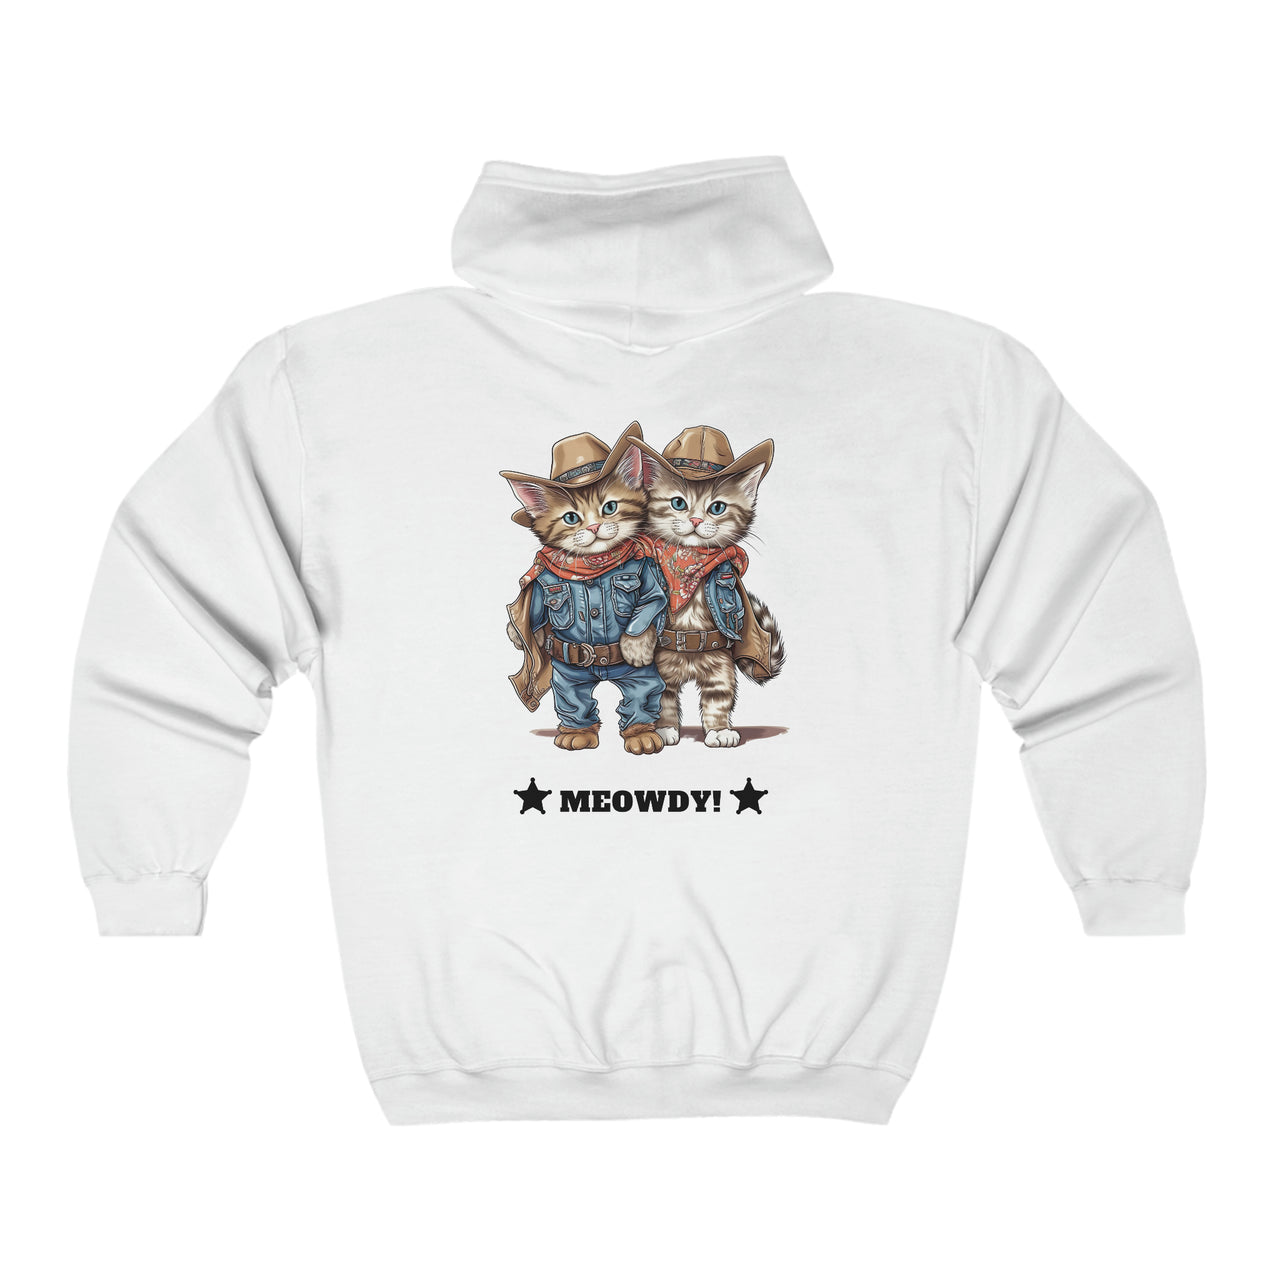 Meowdy Unisex Full Zip Hooded Sweatshirt Kittens Dressed as Cowboys-White-Back